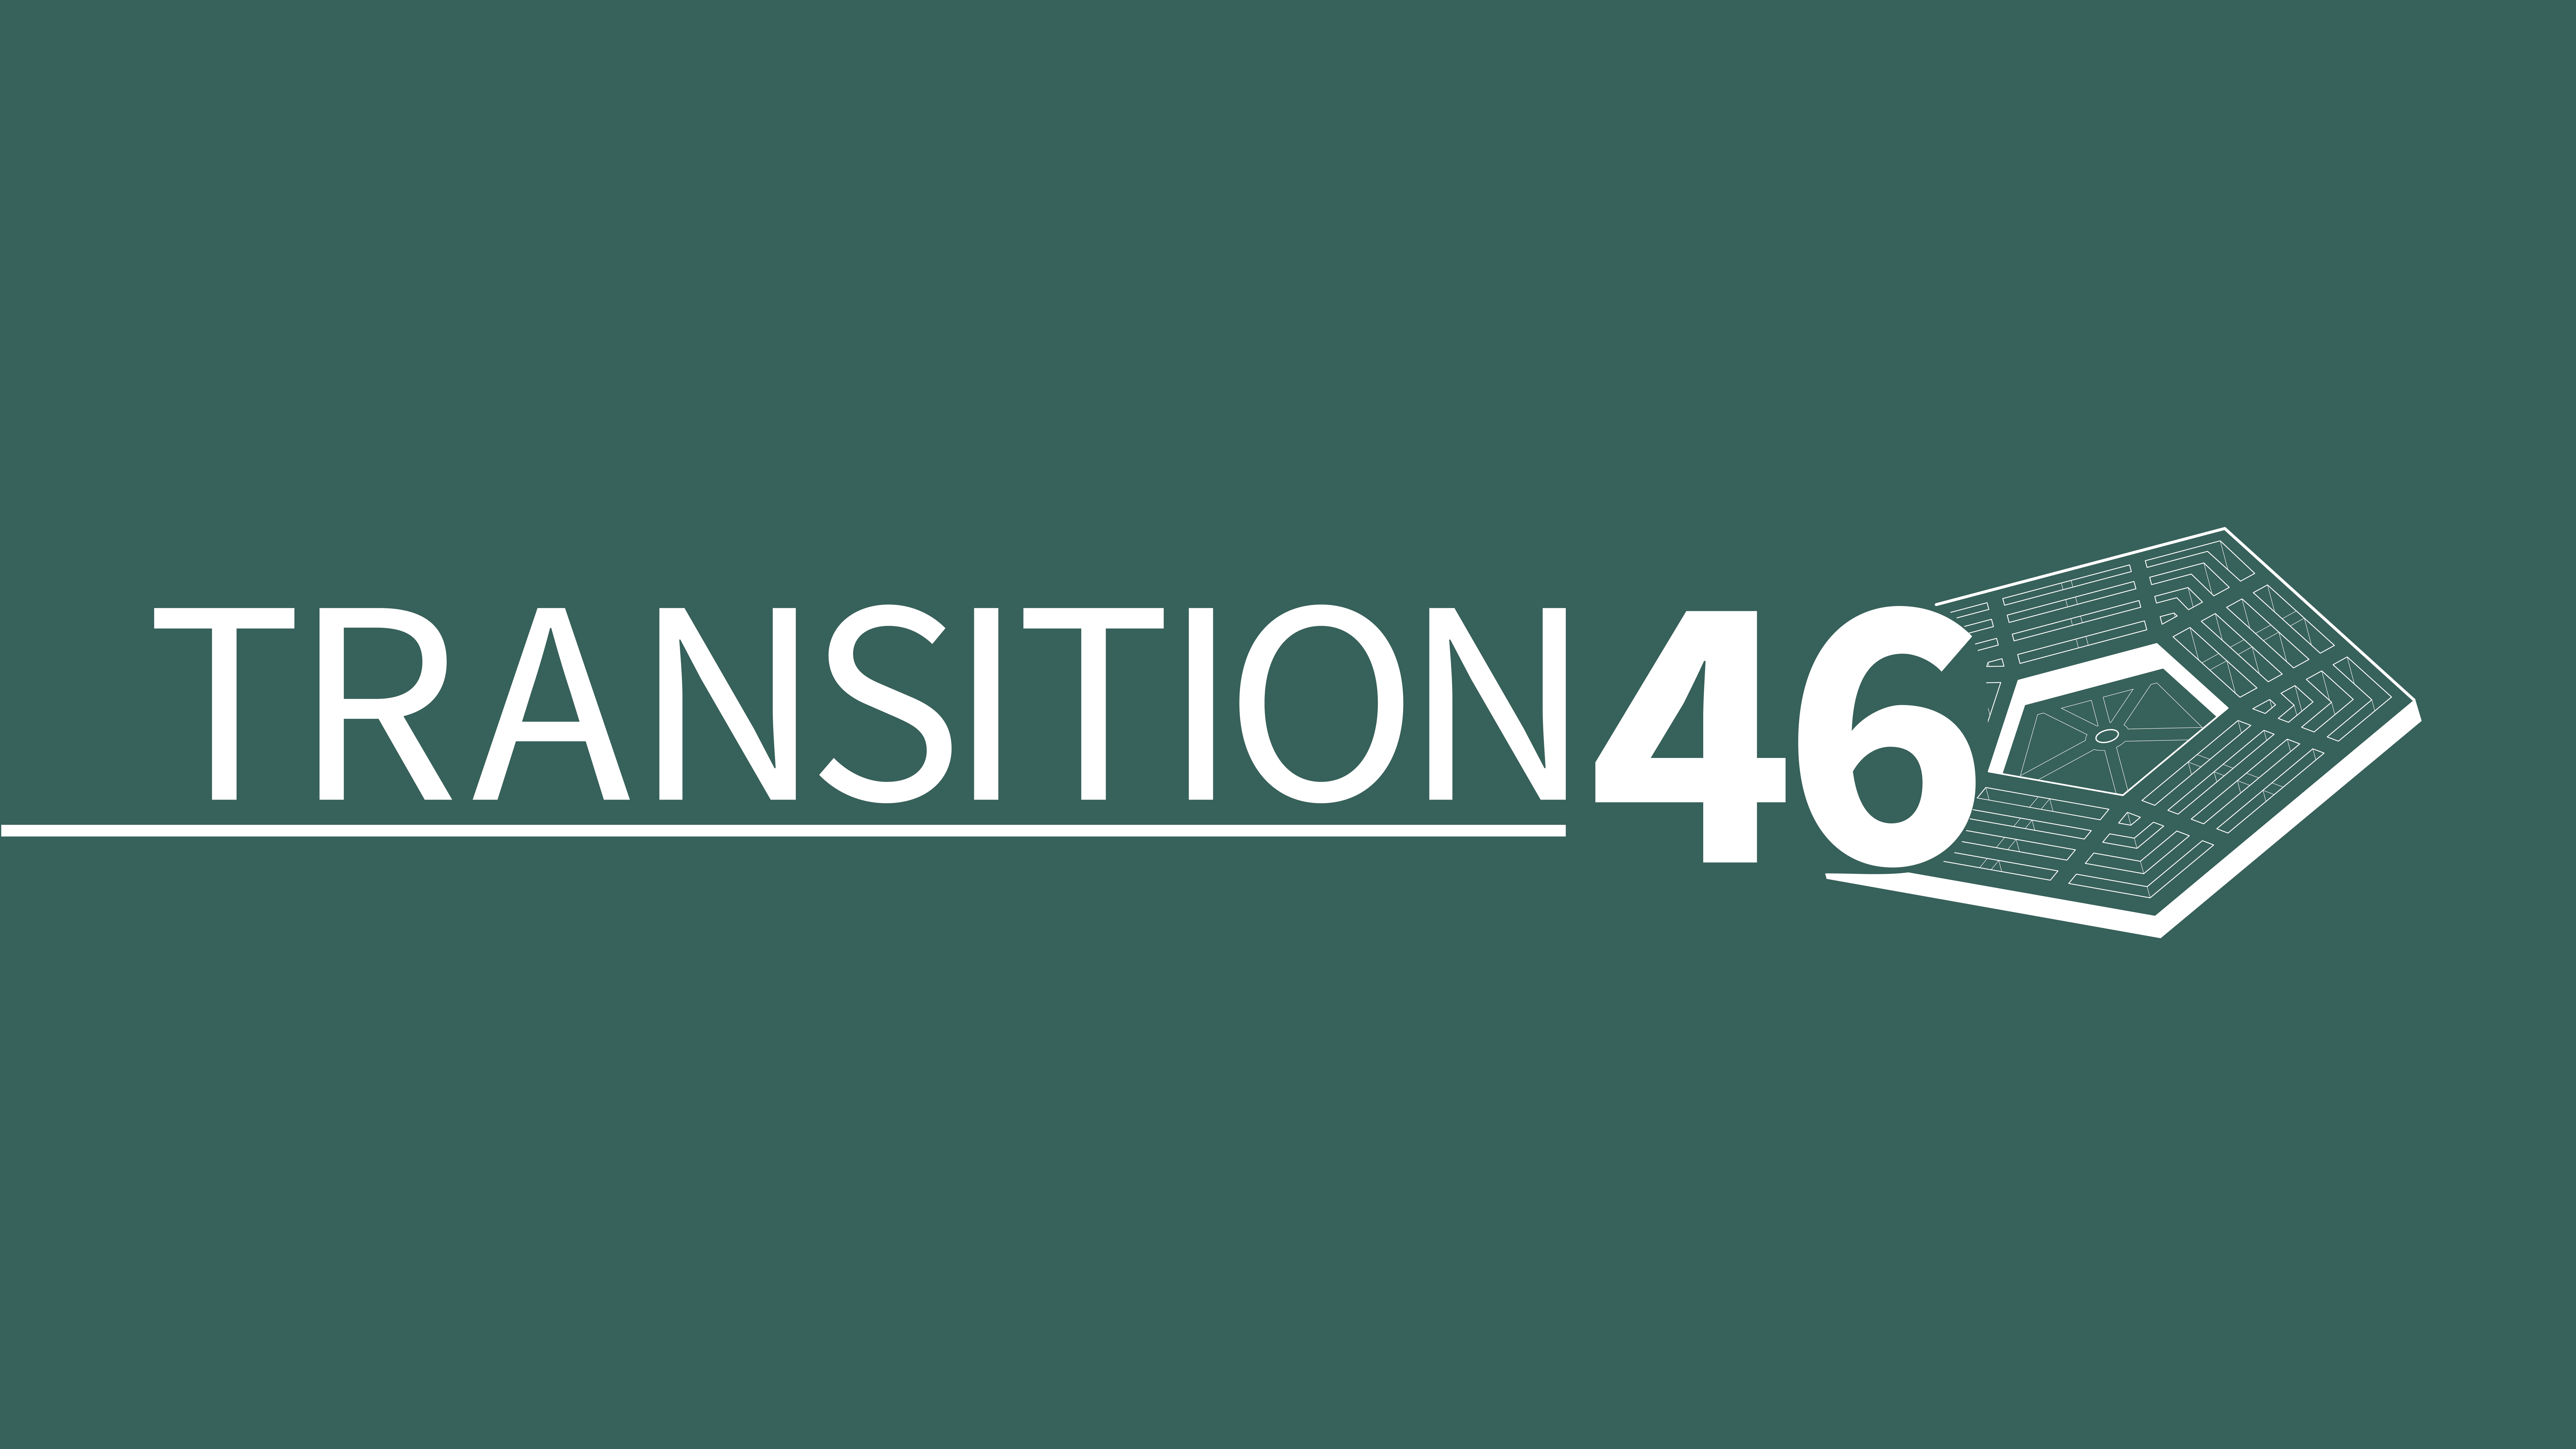 Transition46